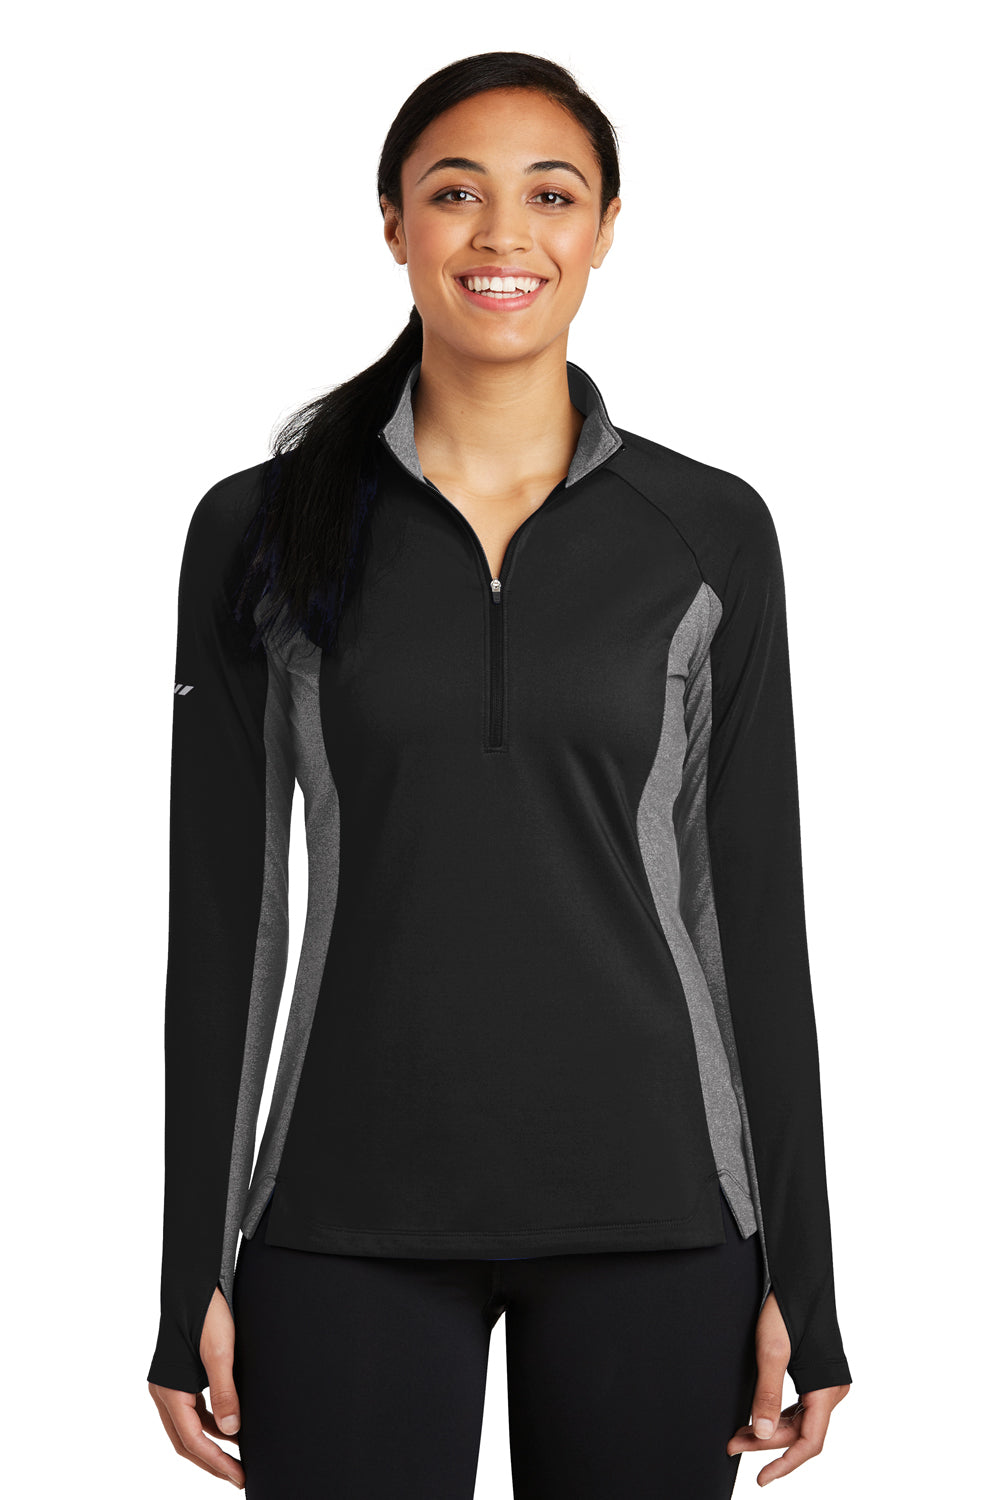 Sport-Tek LST854 Womens Sport-Wick Moisture Wicking 1/4 Zip Sweatshirt Black/Heather Charcoal Grey Front